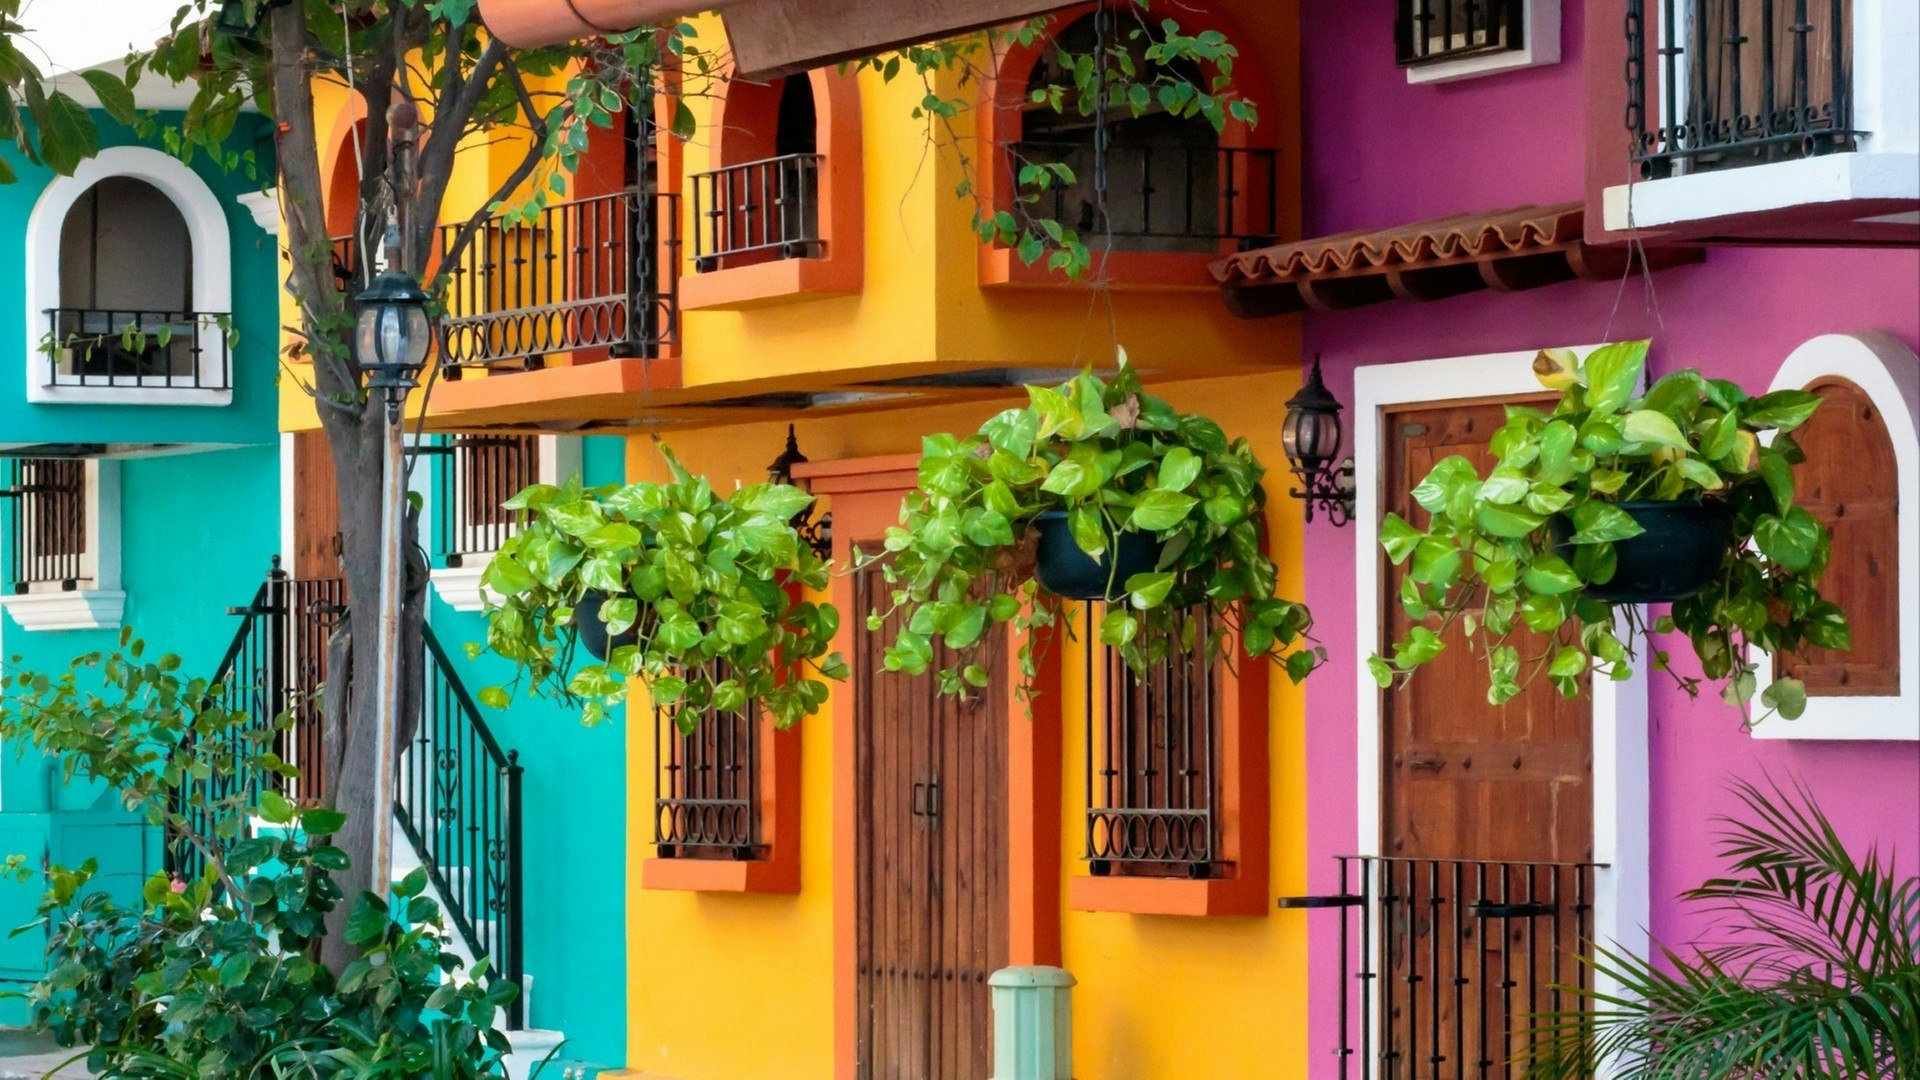 Quaint building facade in Puerto Vallarta Mexico with traditional bright colors